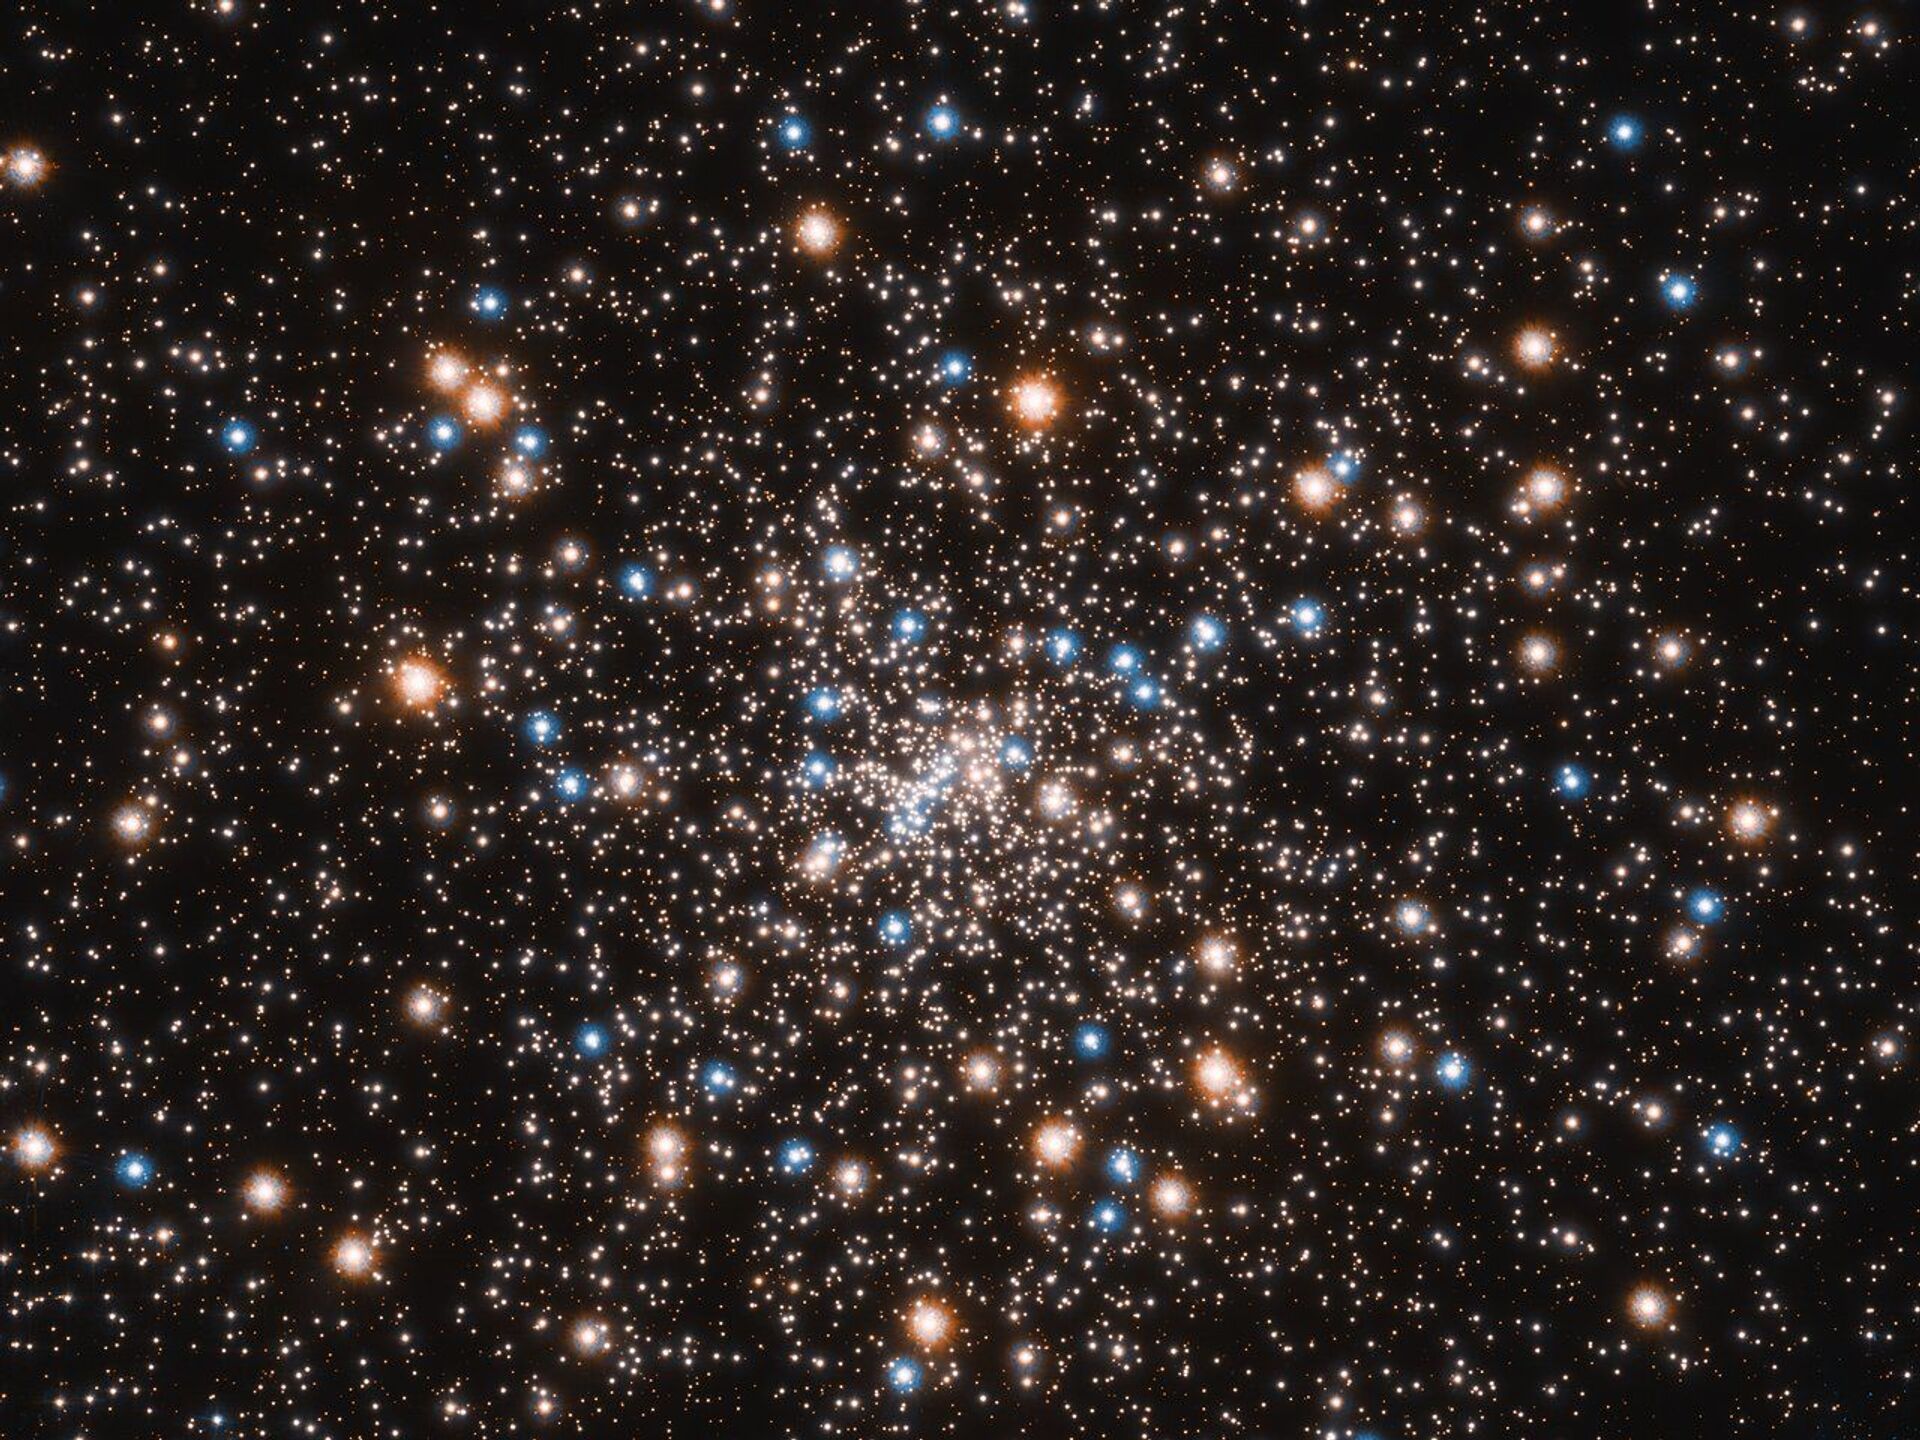 Hubble encontra 'enxame' de buracos negros em lugar onde devia haver só 1 - Sputnik Brasil, 1920, 12.02.2021